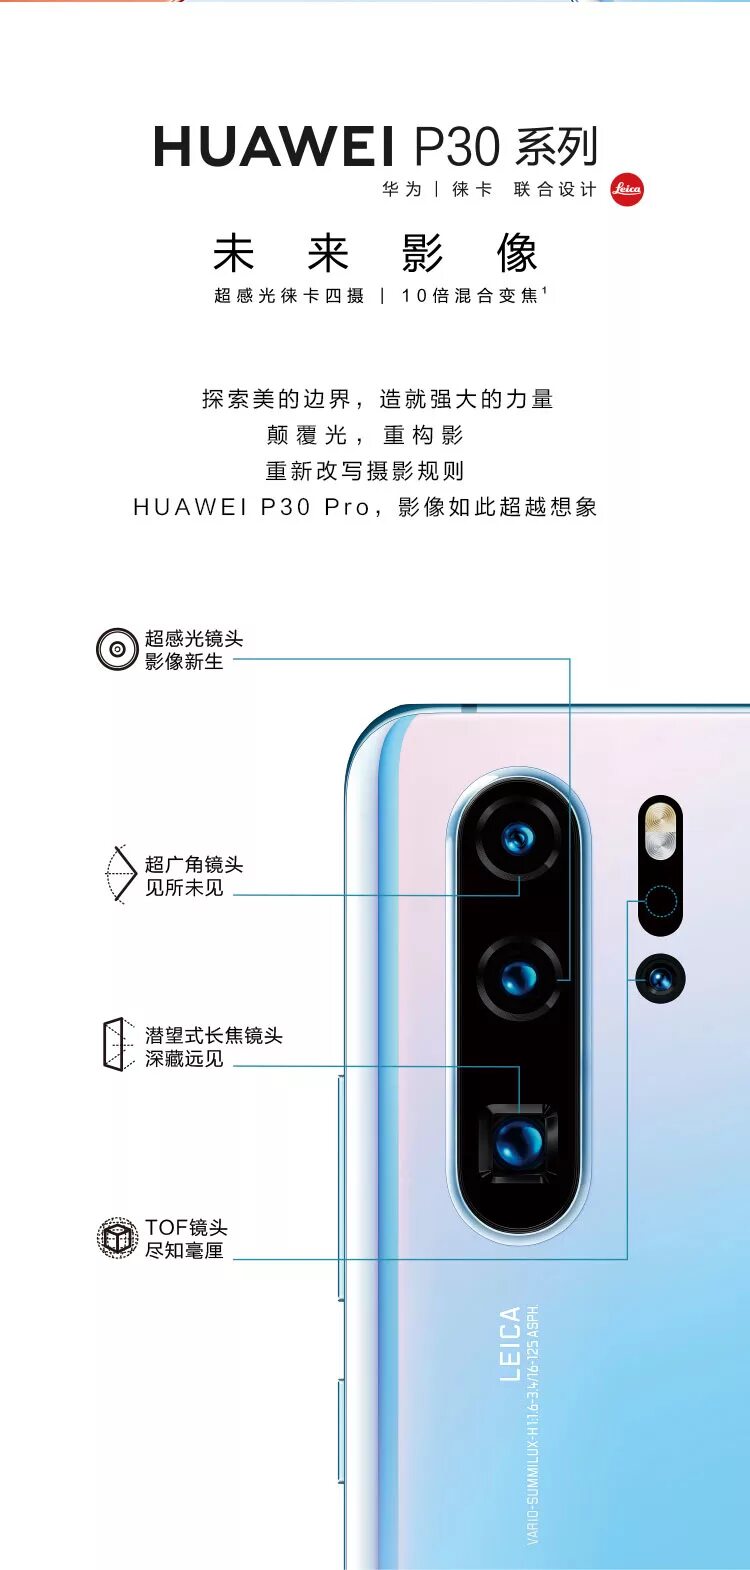 P30 lite характеристики. Хуавей п30. Хойвей п 30. Huawei p30 Pro. Huawei p30 Pro камера.